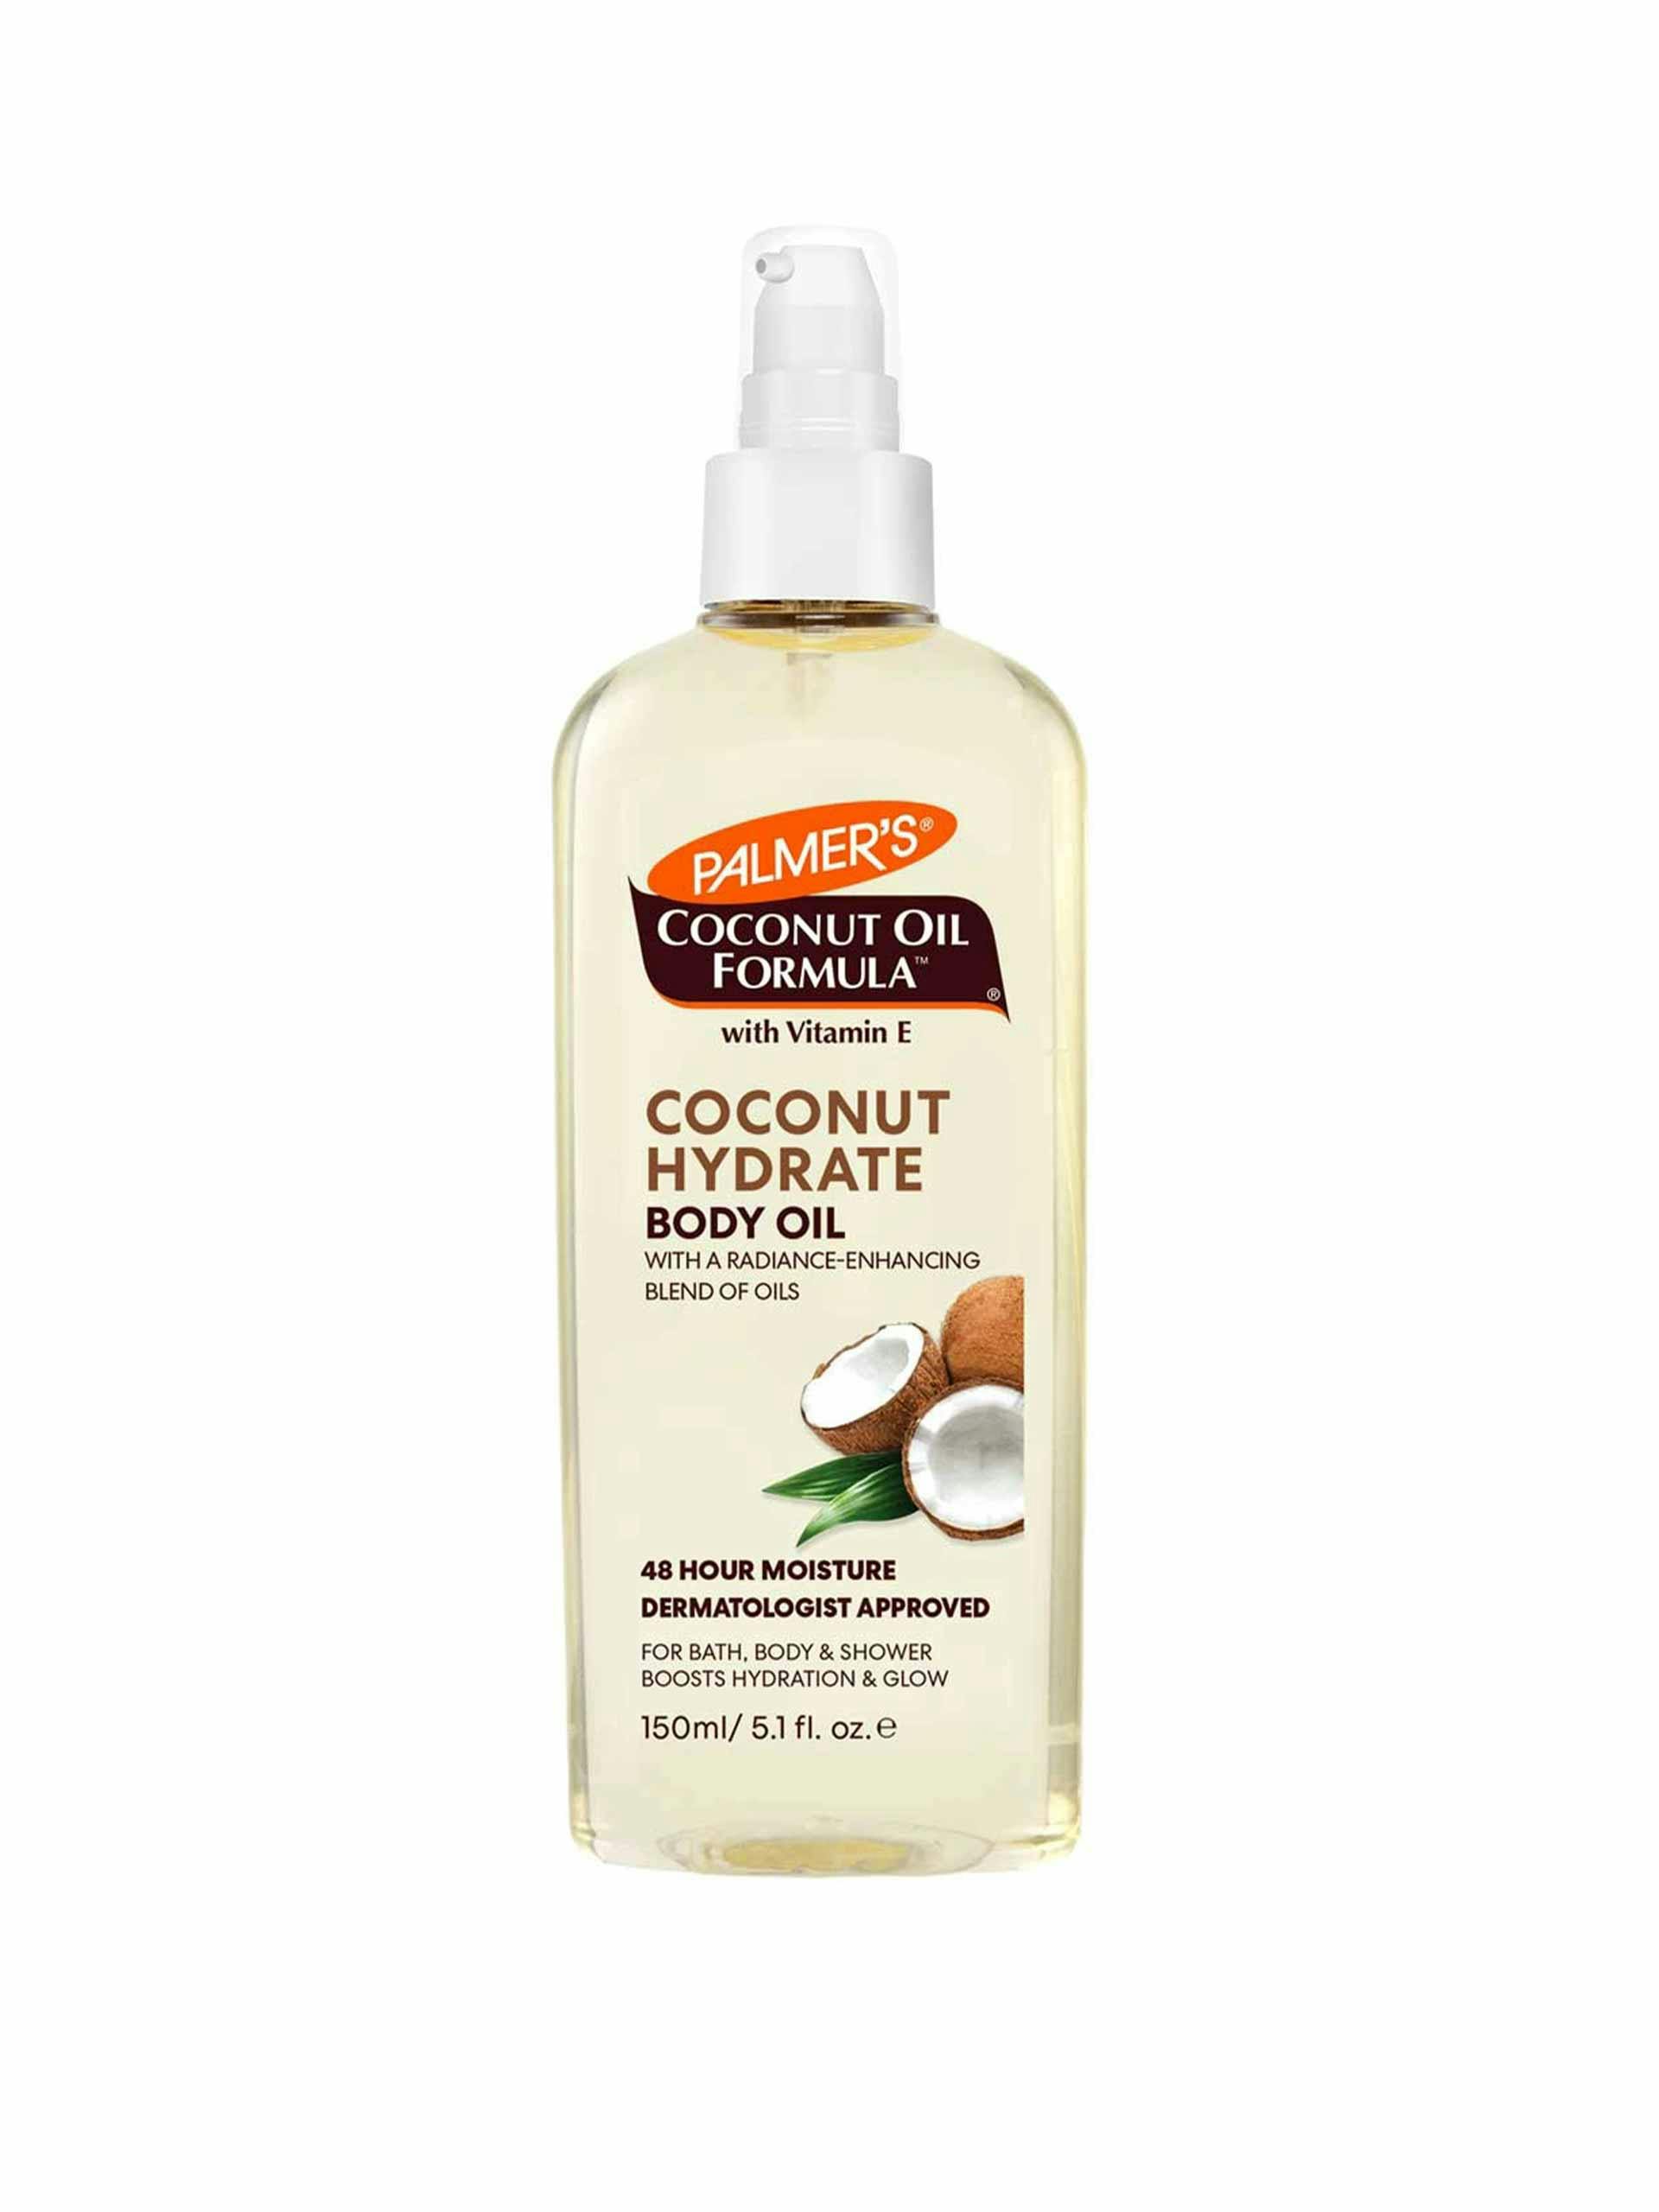 Coconut hydrate body oil